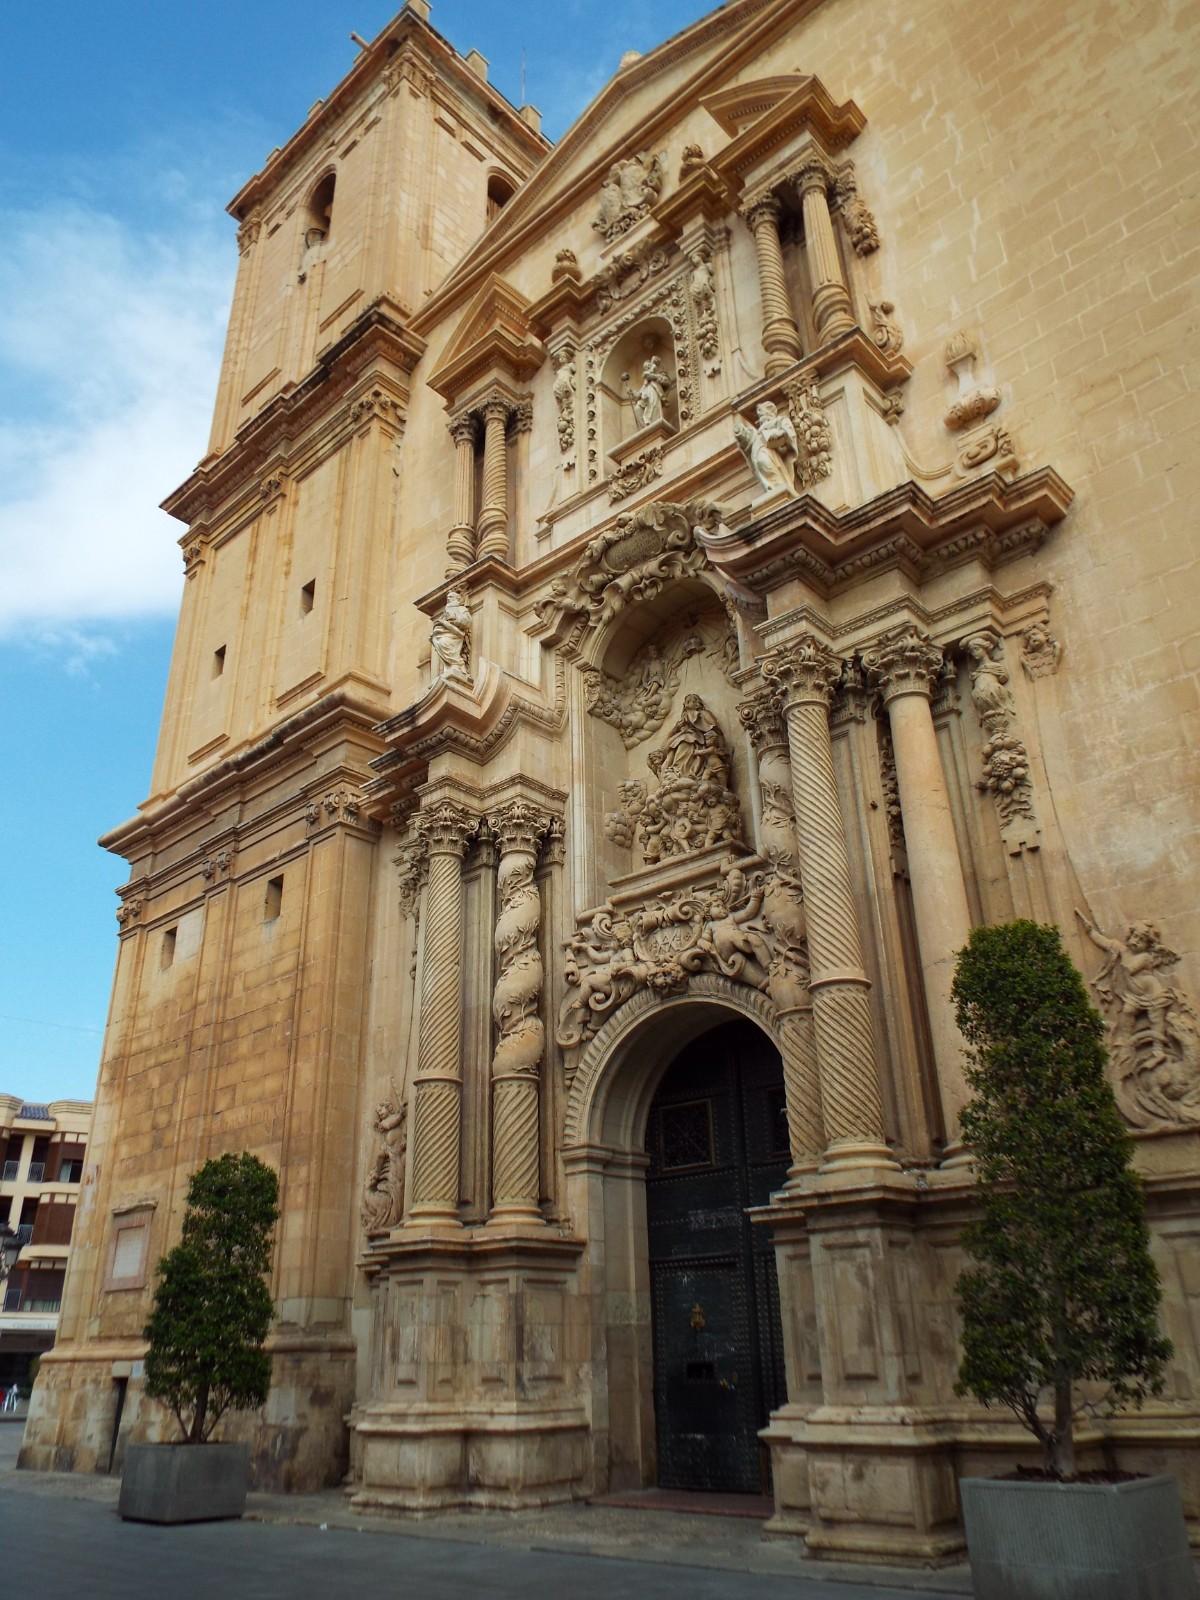 The Basilica of Santa Maria